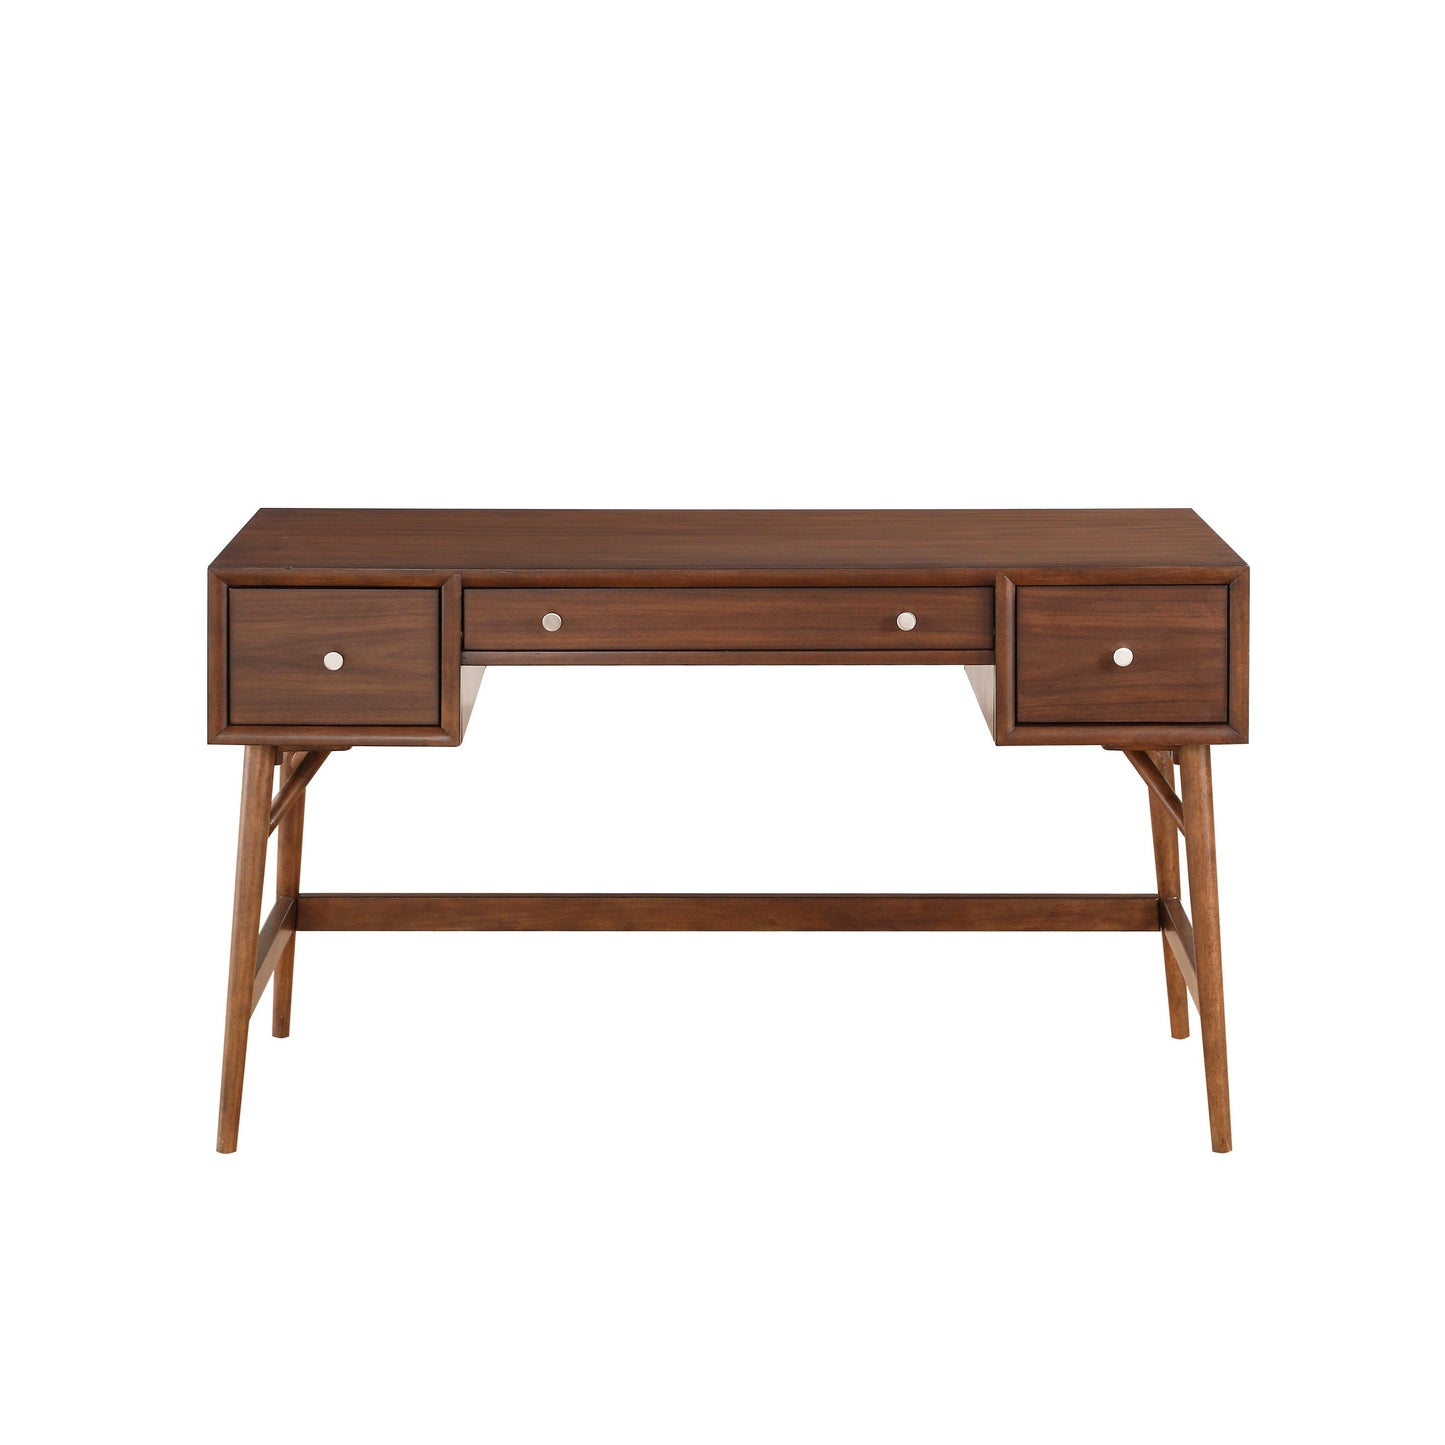 Brown Finish Stylish Writing Desk Storage Drawers Nickel Knob Hardware Walnut Veneer Wood Furniture